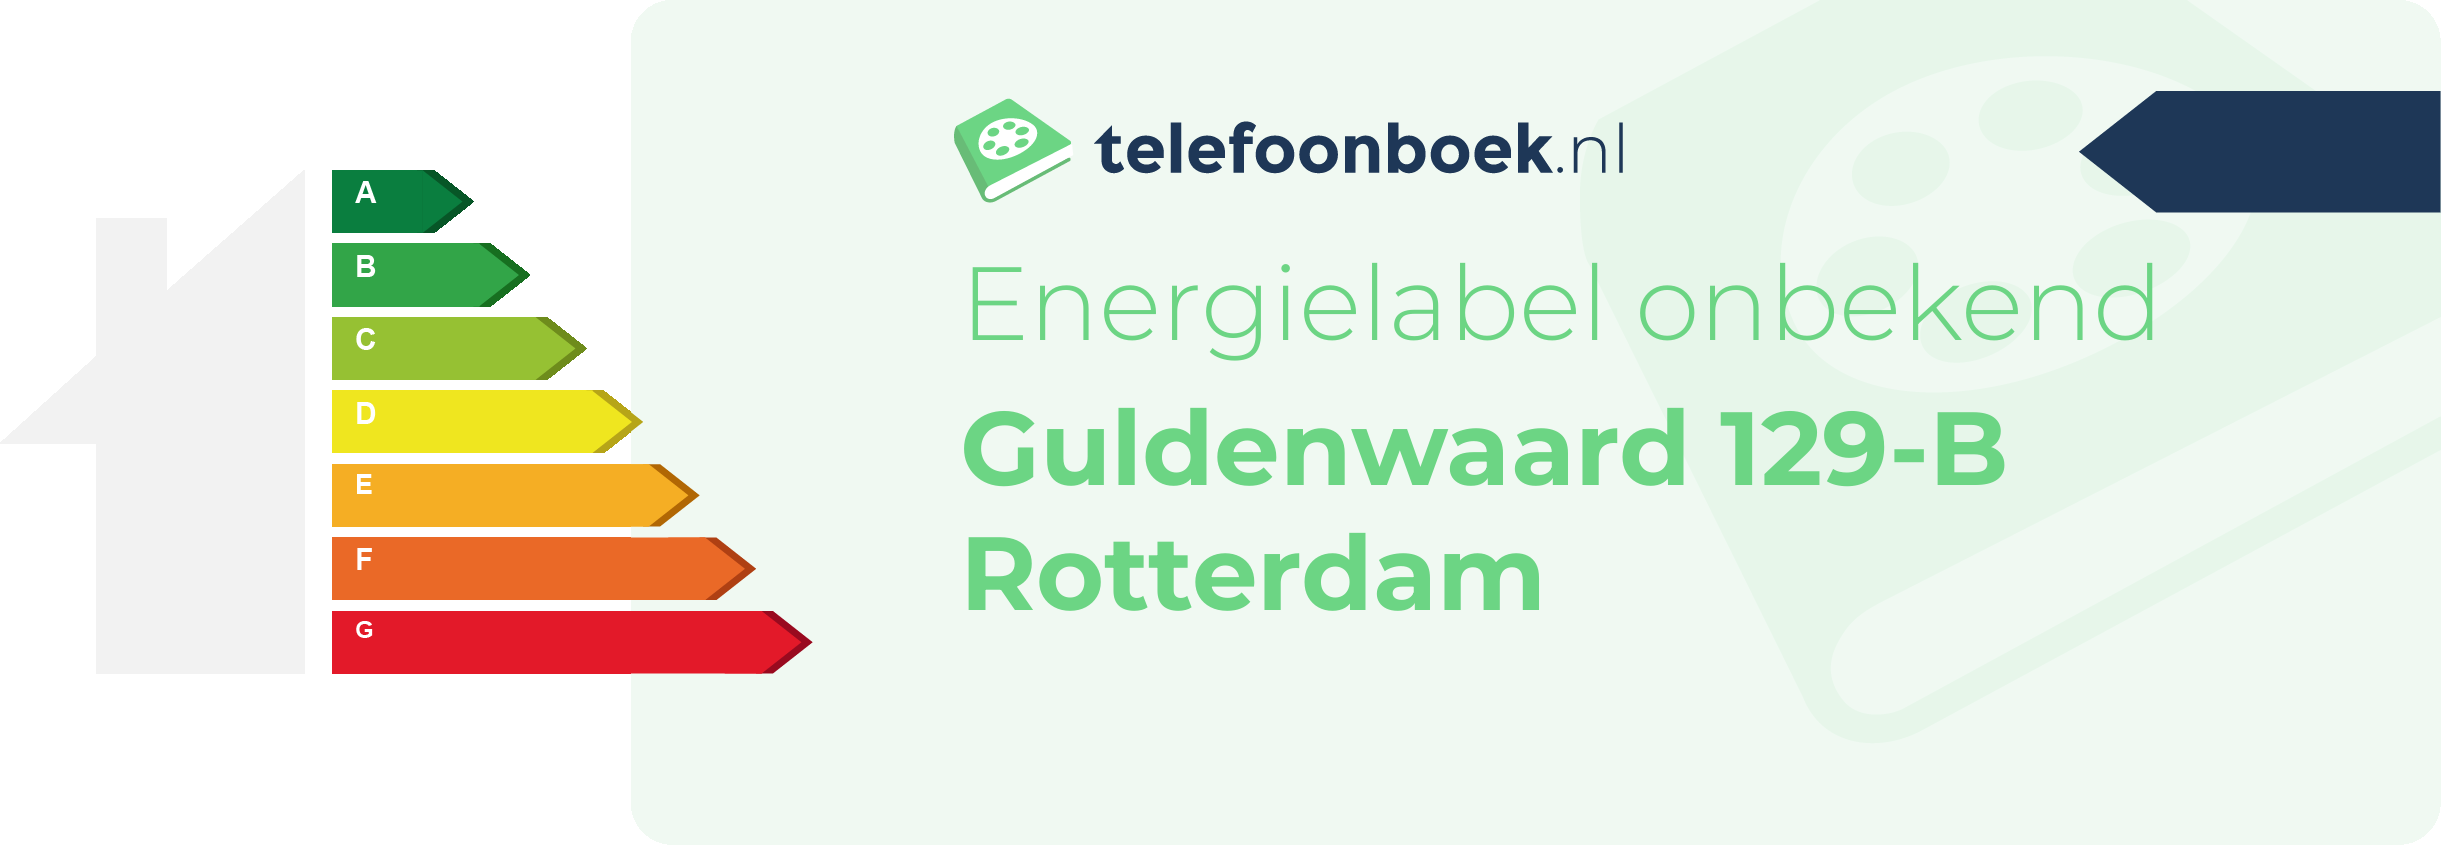 Energielabel Guldenwaard 129-B Rotterdam